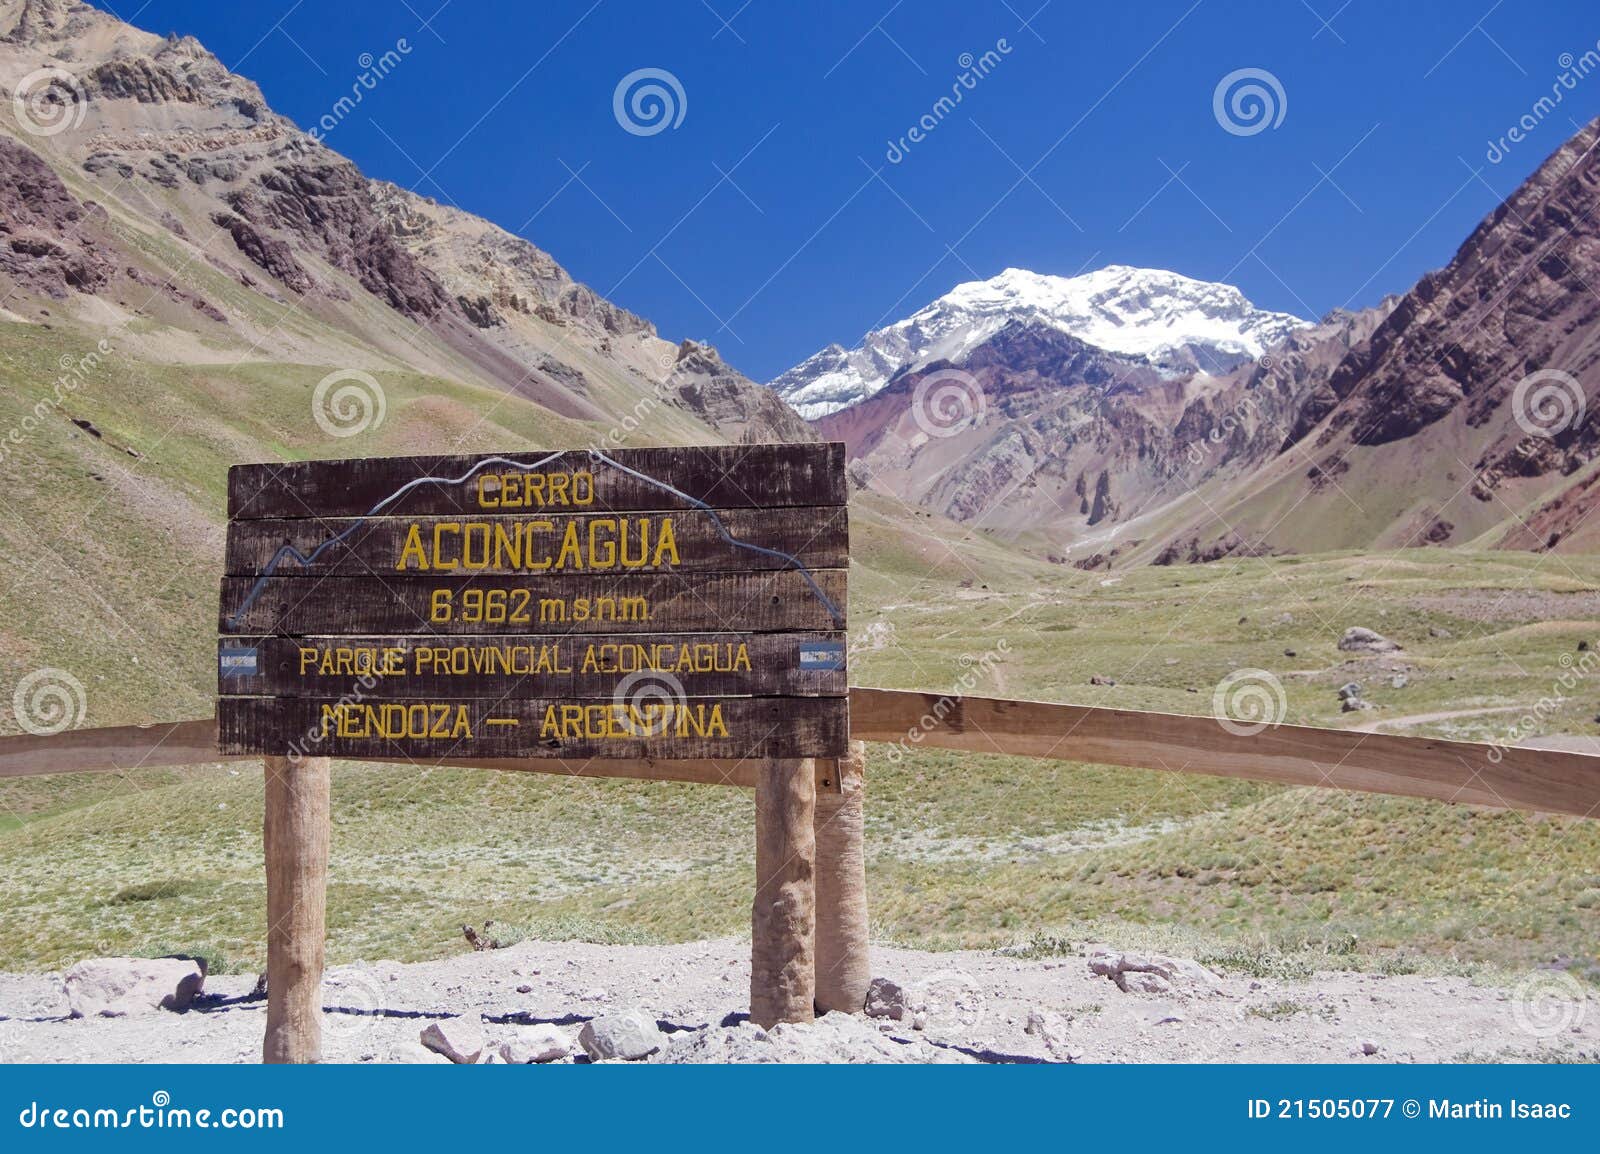 aconcagua provincial park, argentina